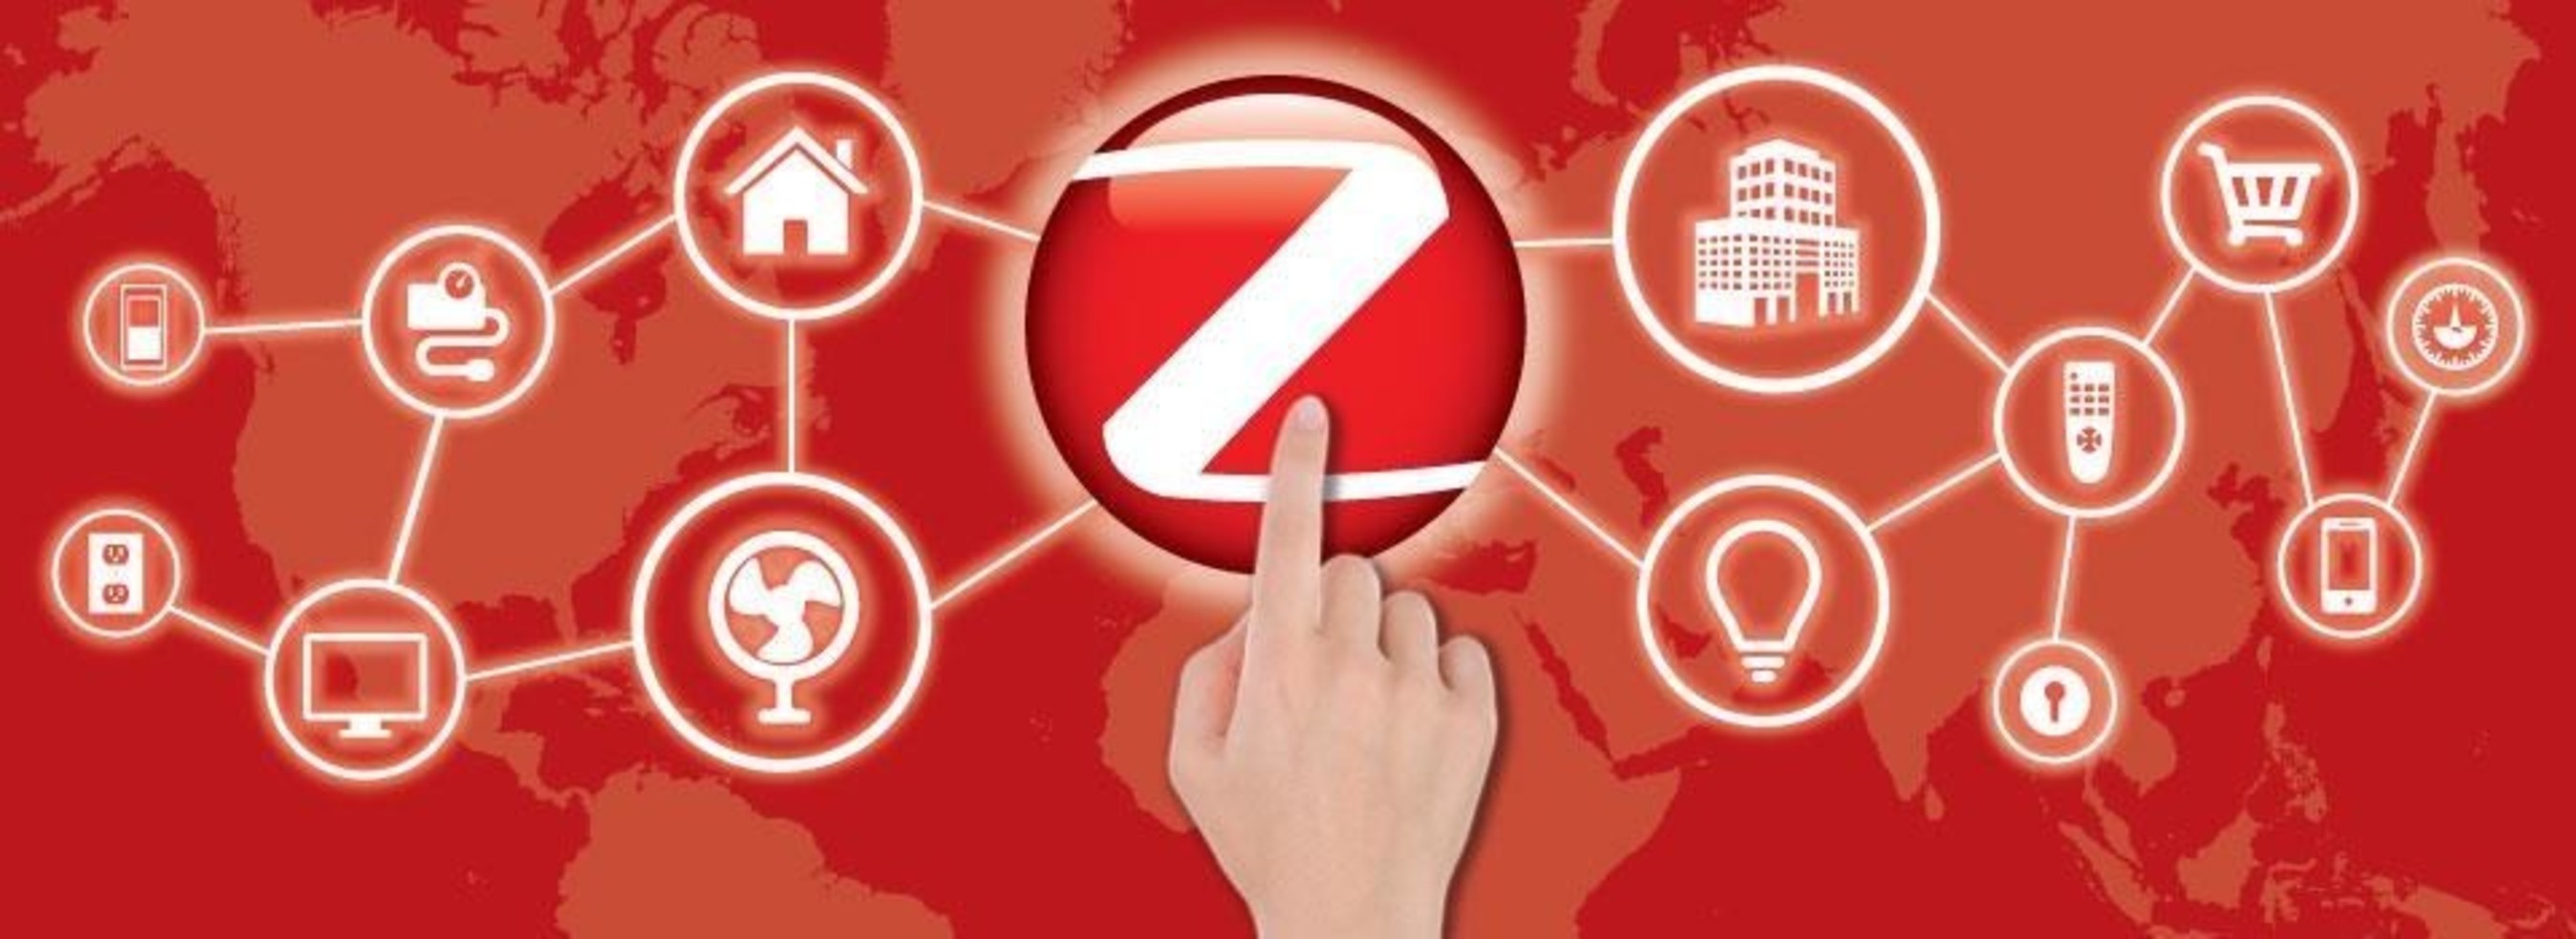 ZigBee 3.0 Creates Single Open, Global Wireless Standard for Devices